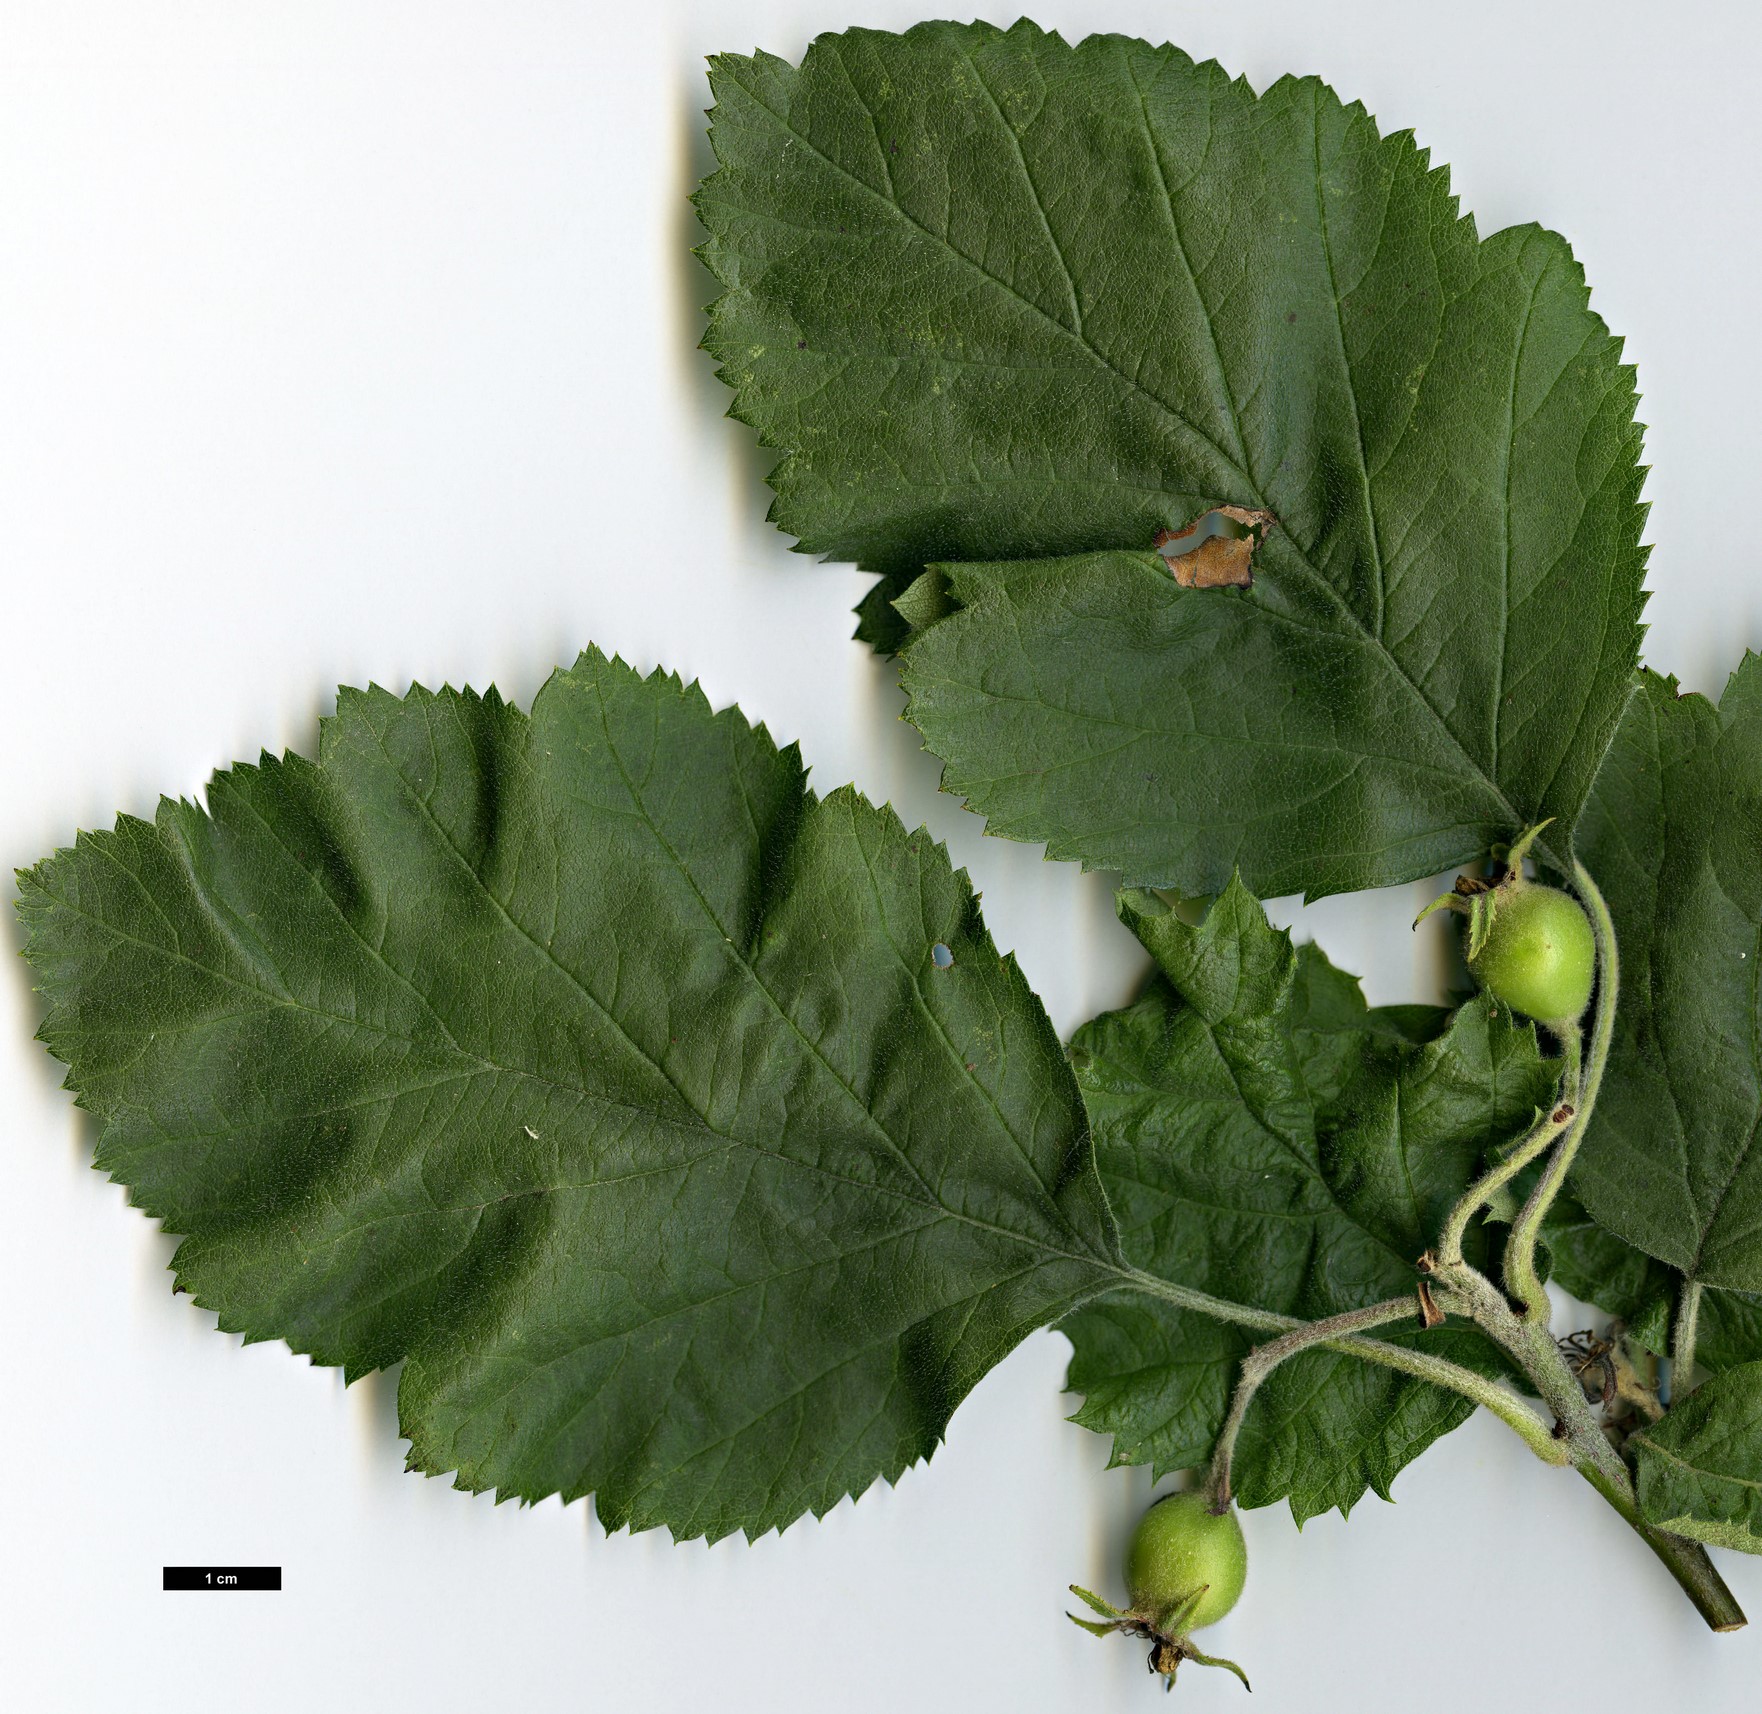 High resolution image: Family: Rosaceae - Genus: Crataegus - Taxon: mollis - SpeciesSub: var. dumetosa